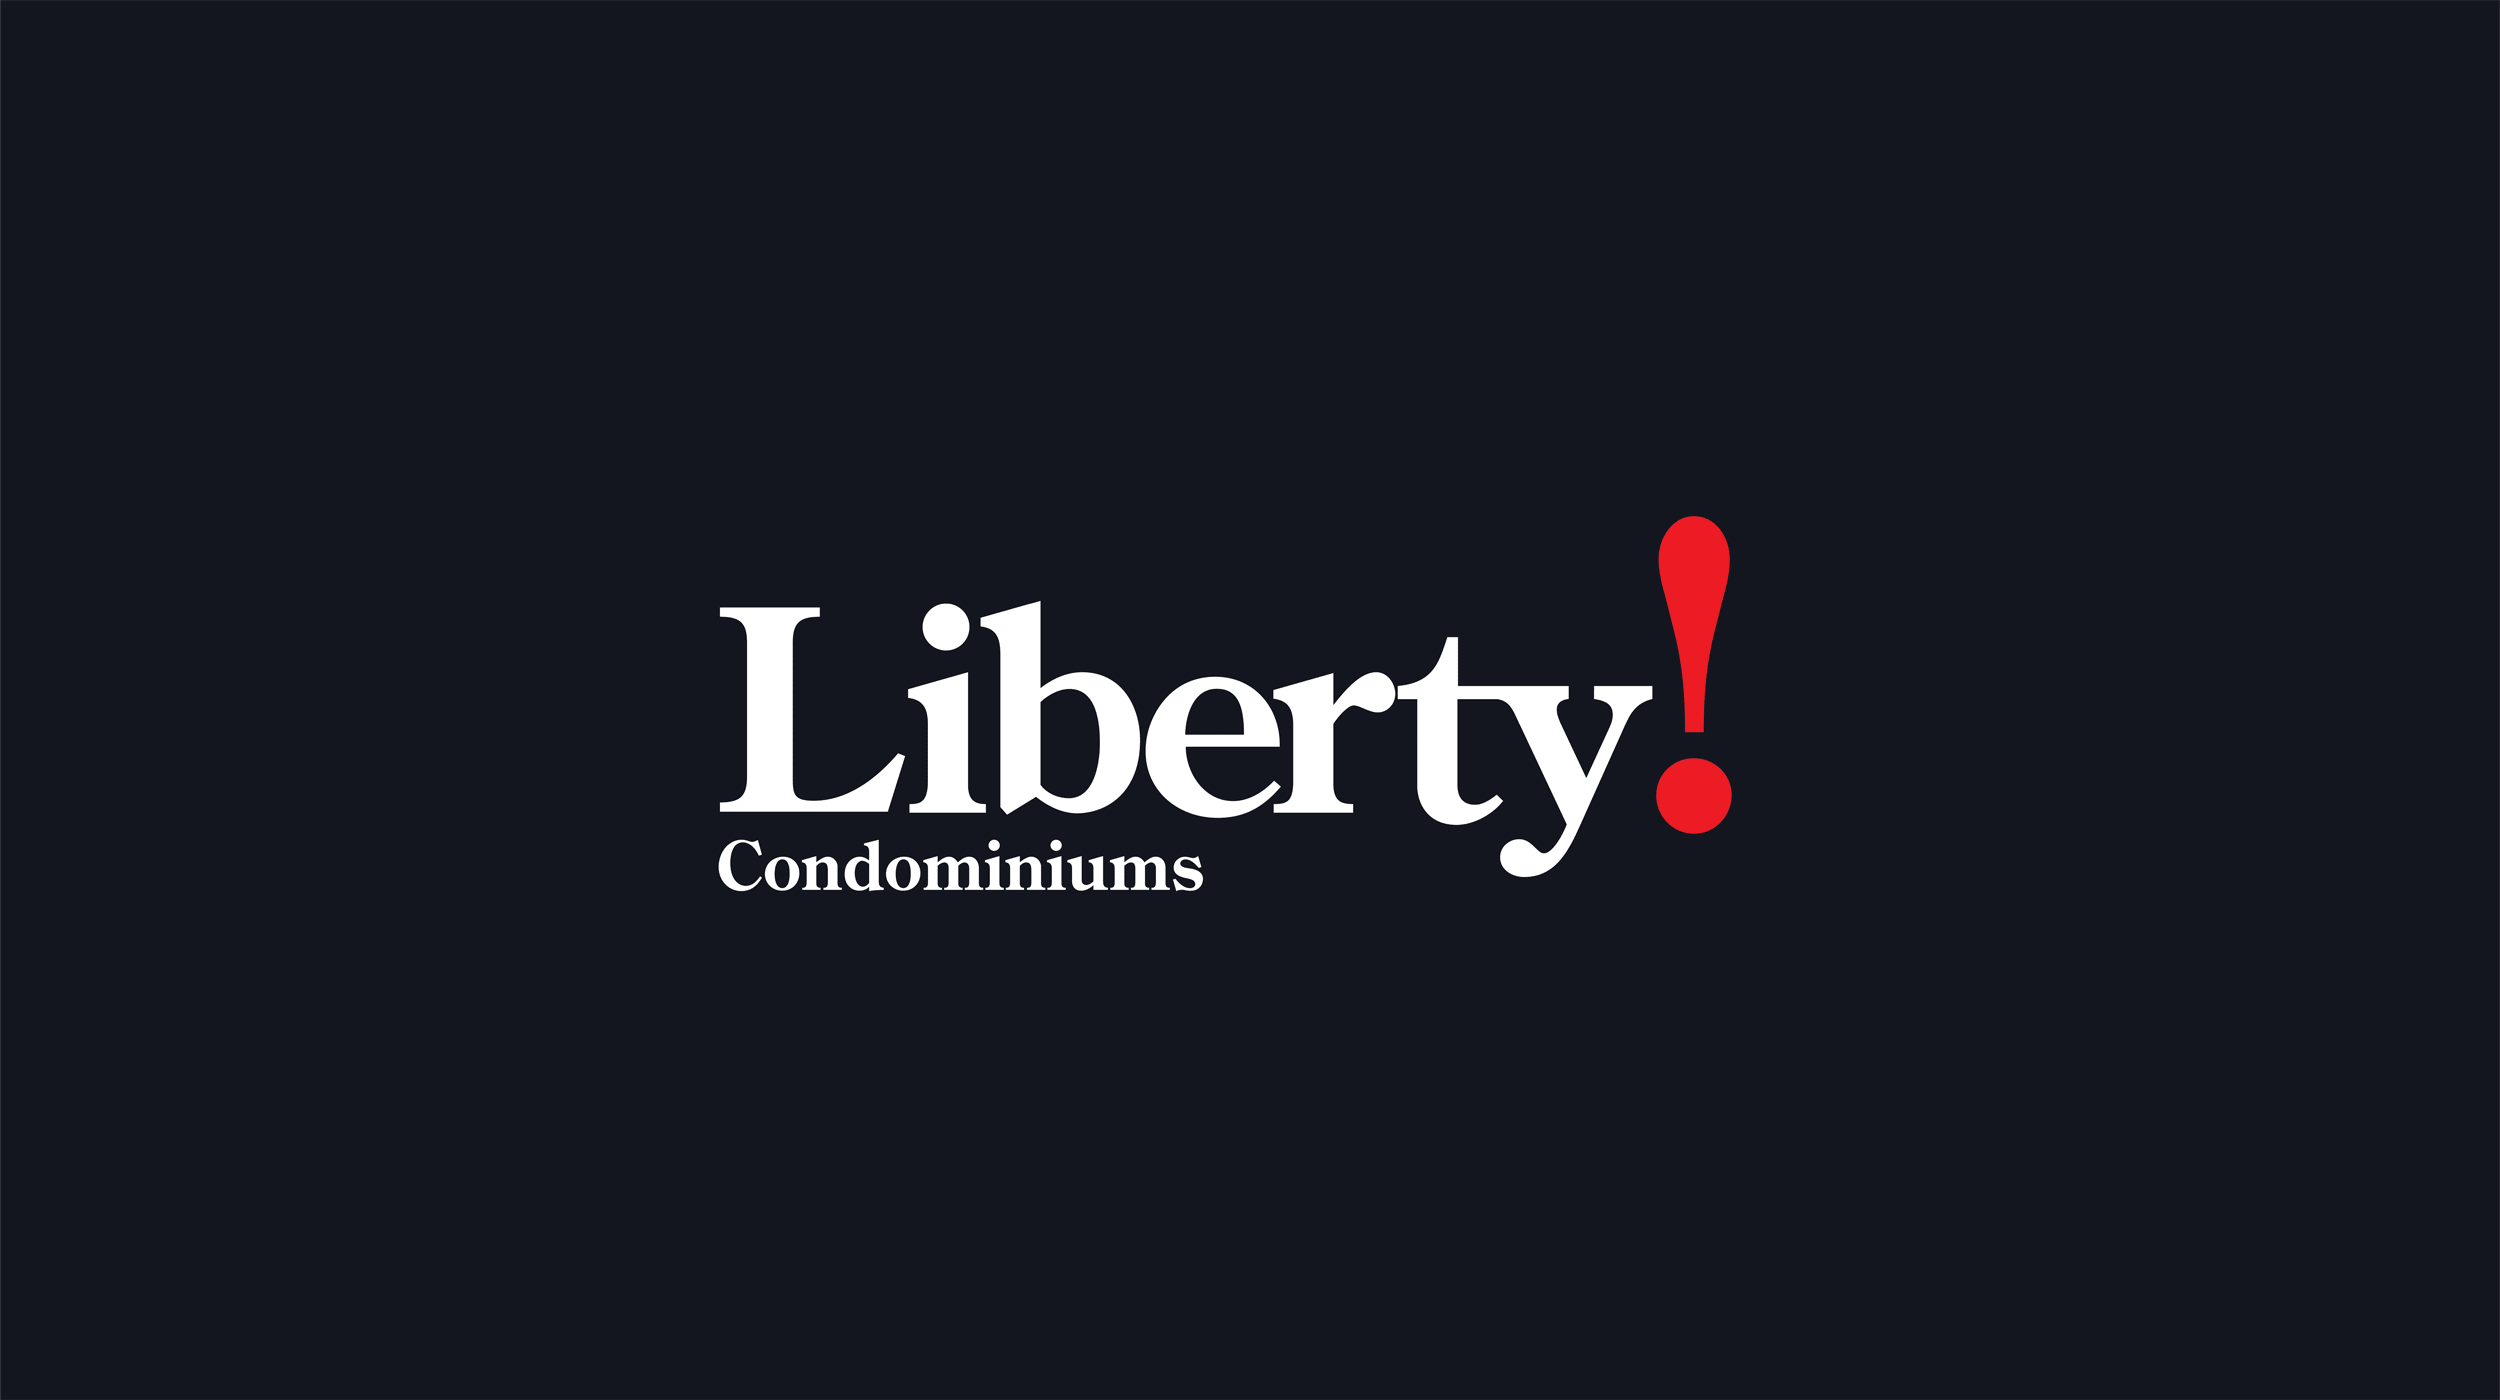 Liberty Condominiums brochure and logo design